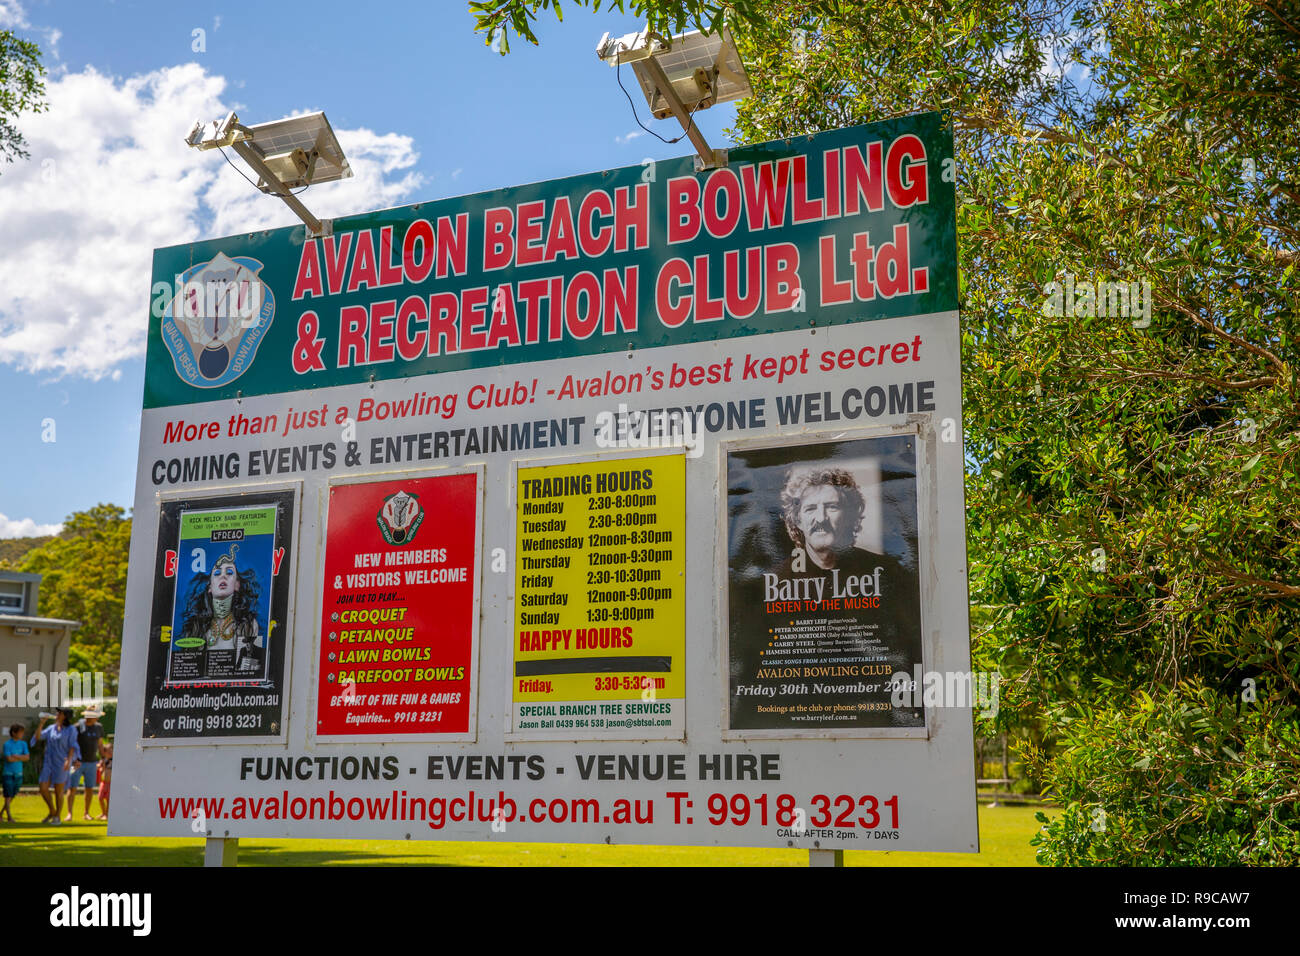 Avalon beach bowling and recreation club on Sydney northern beaches,Australia Stock Photo